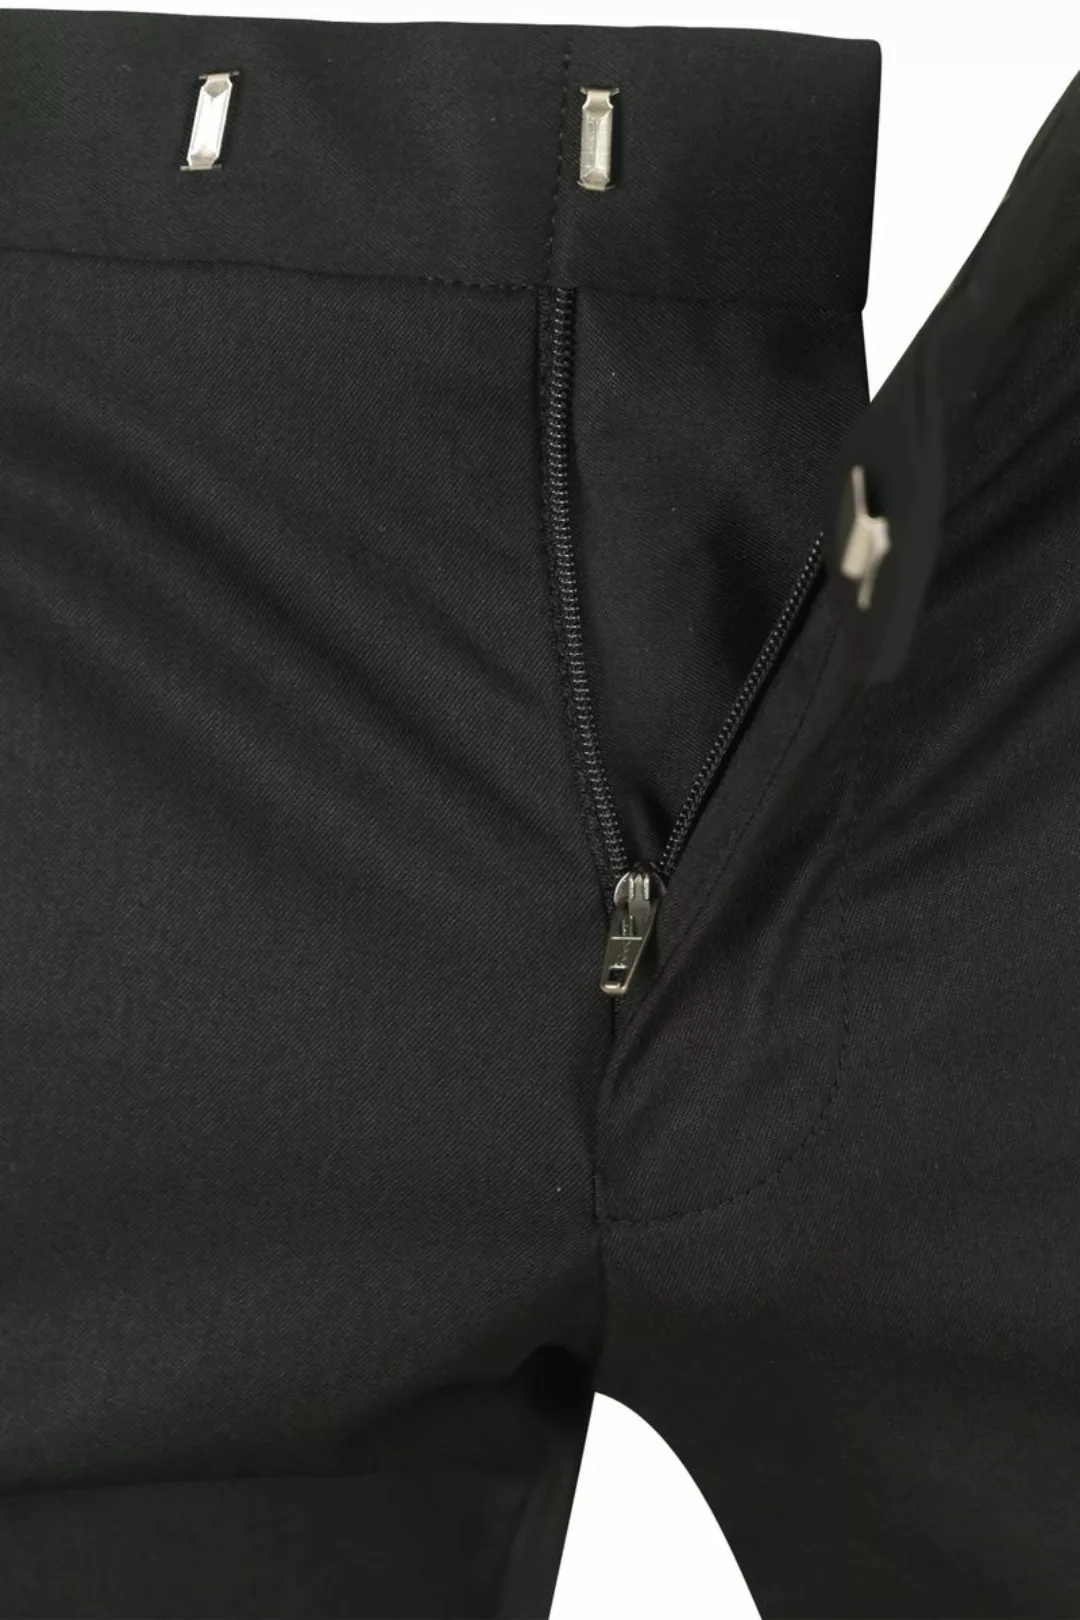 Frack Pantalon Hudson Schwarz - Größe 25 günstig online kaufen